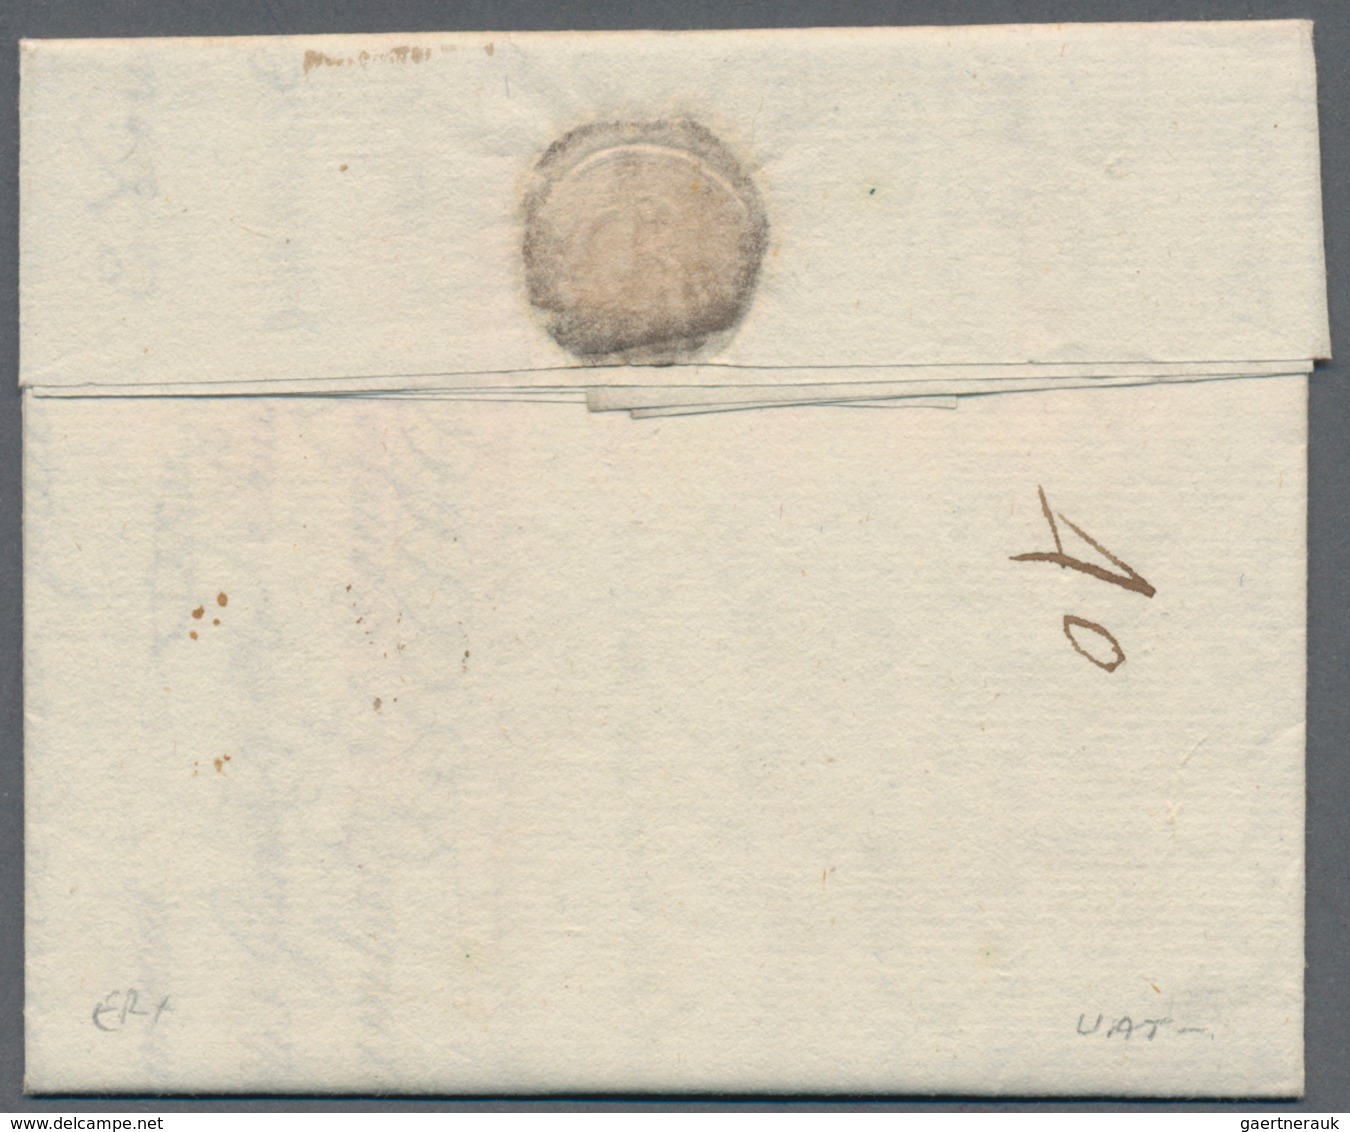 Monaco - Vorphilatelie: 1784 - Manuscript "DE MONACO" (French Post Office Before 1792) On Extremely - ...-1885 Prephilately